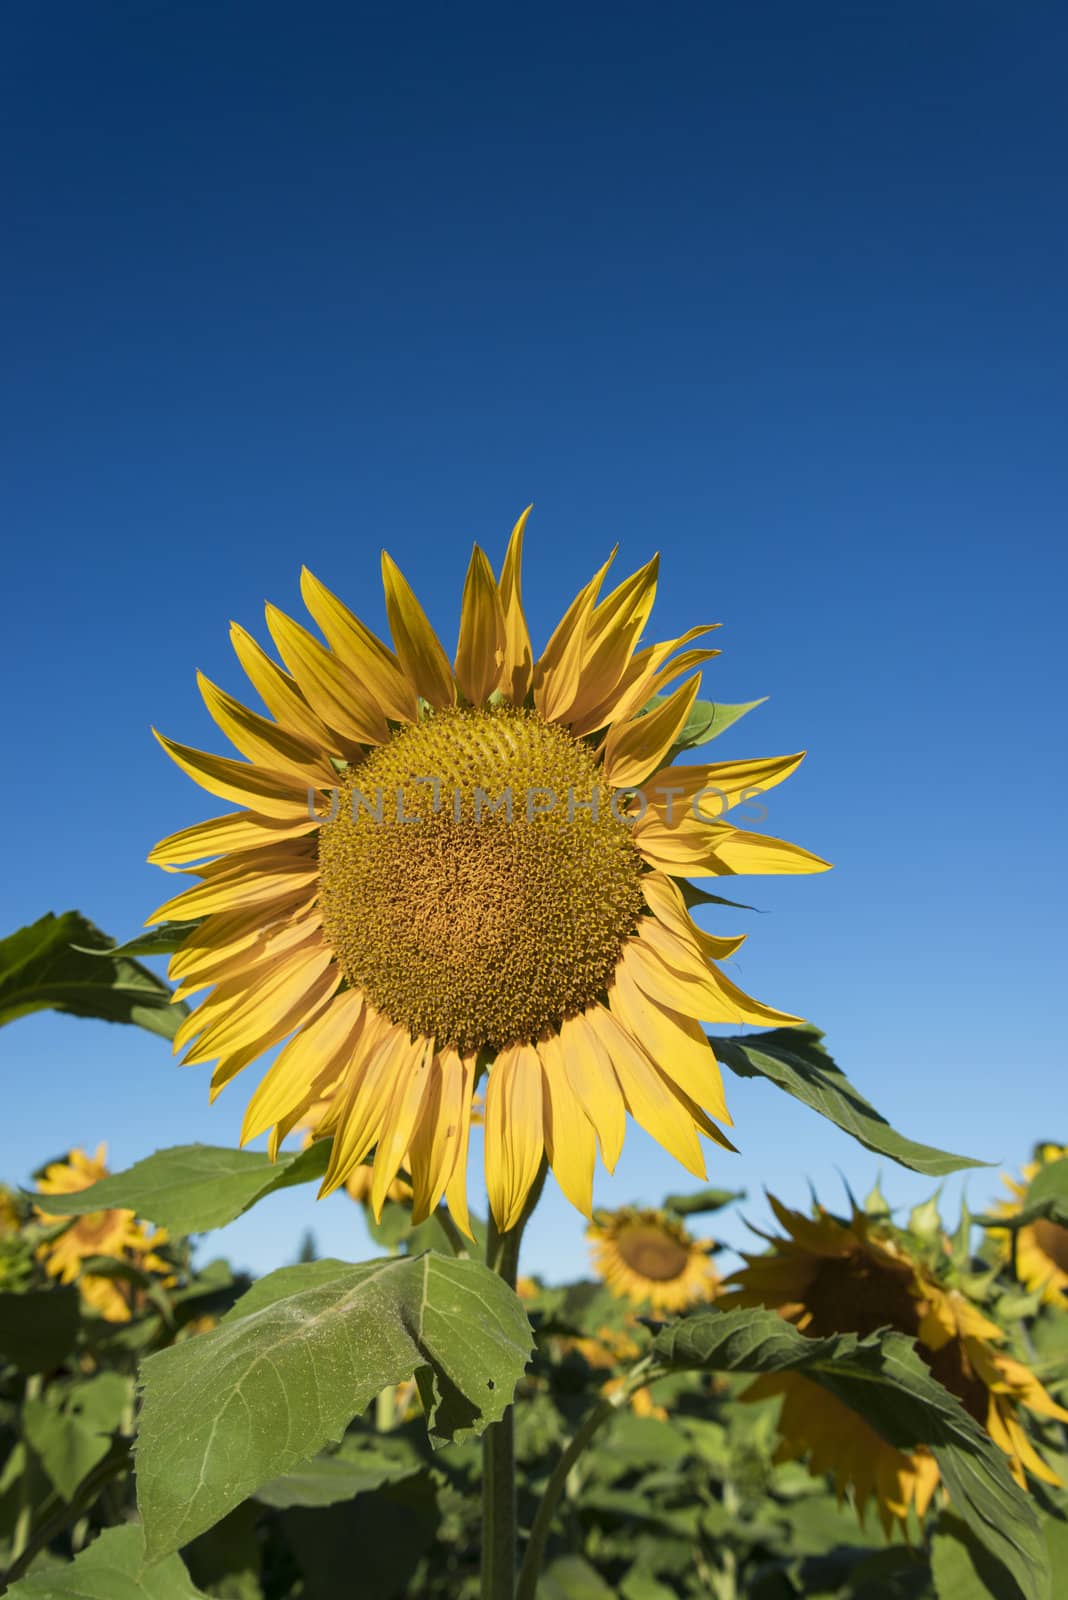 Large Sunflower by Gordo25